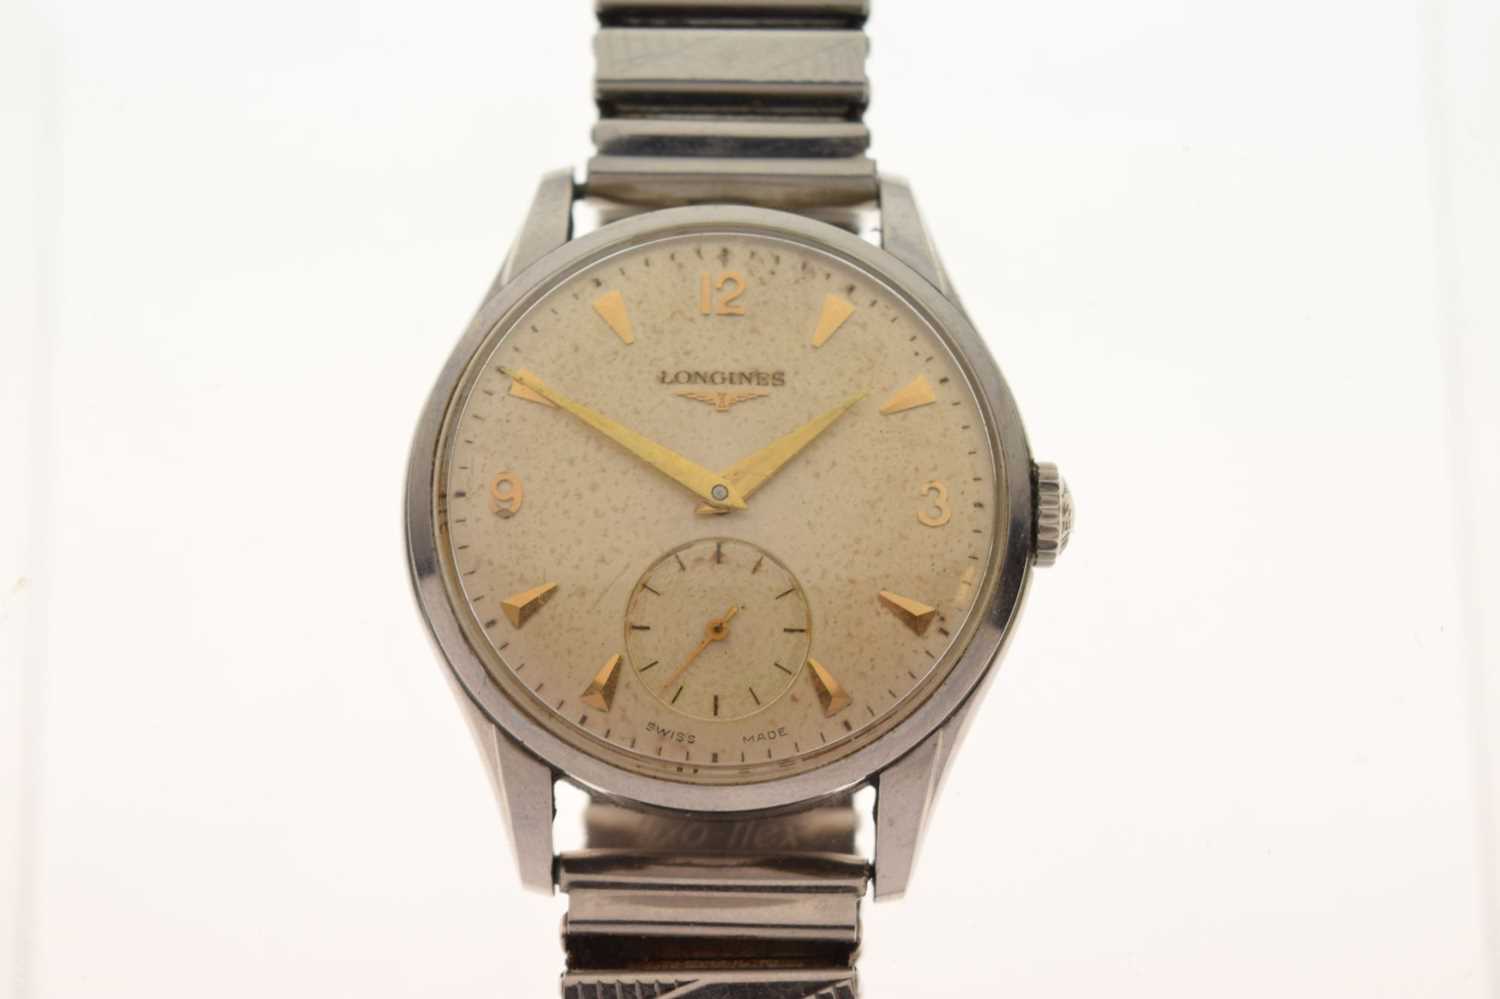 Longines - Gentleman's manual wind wristwatch - Image 2 of 7